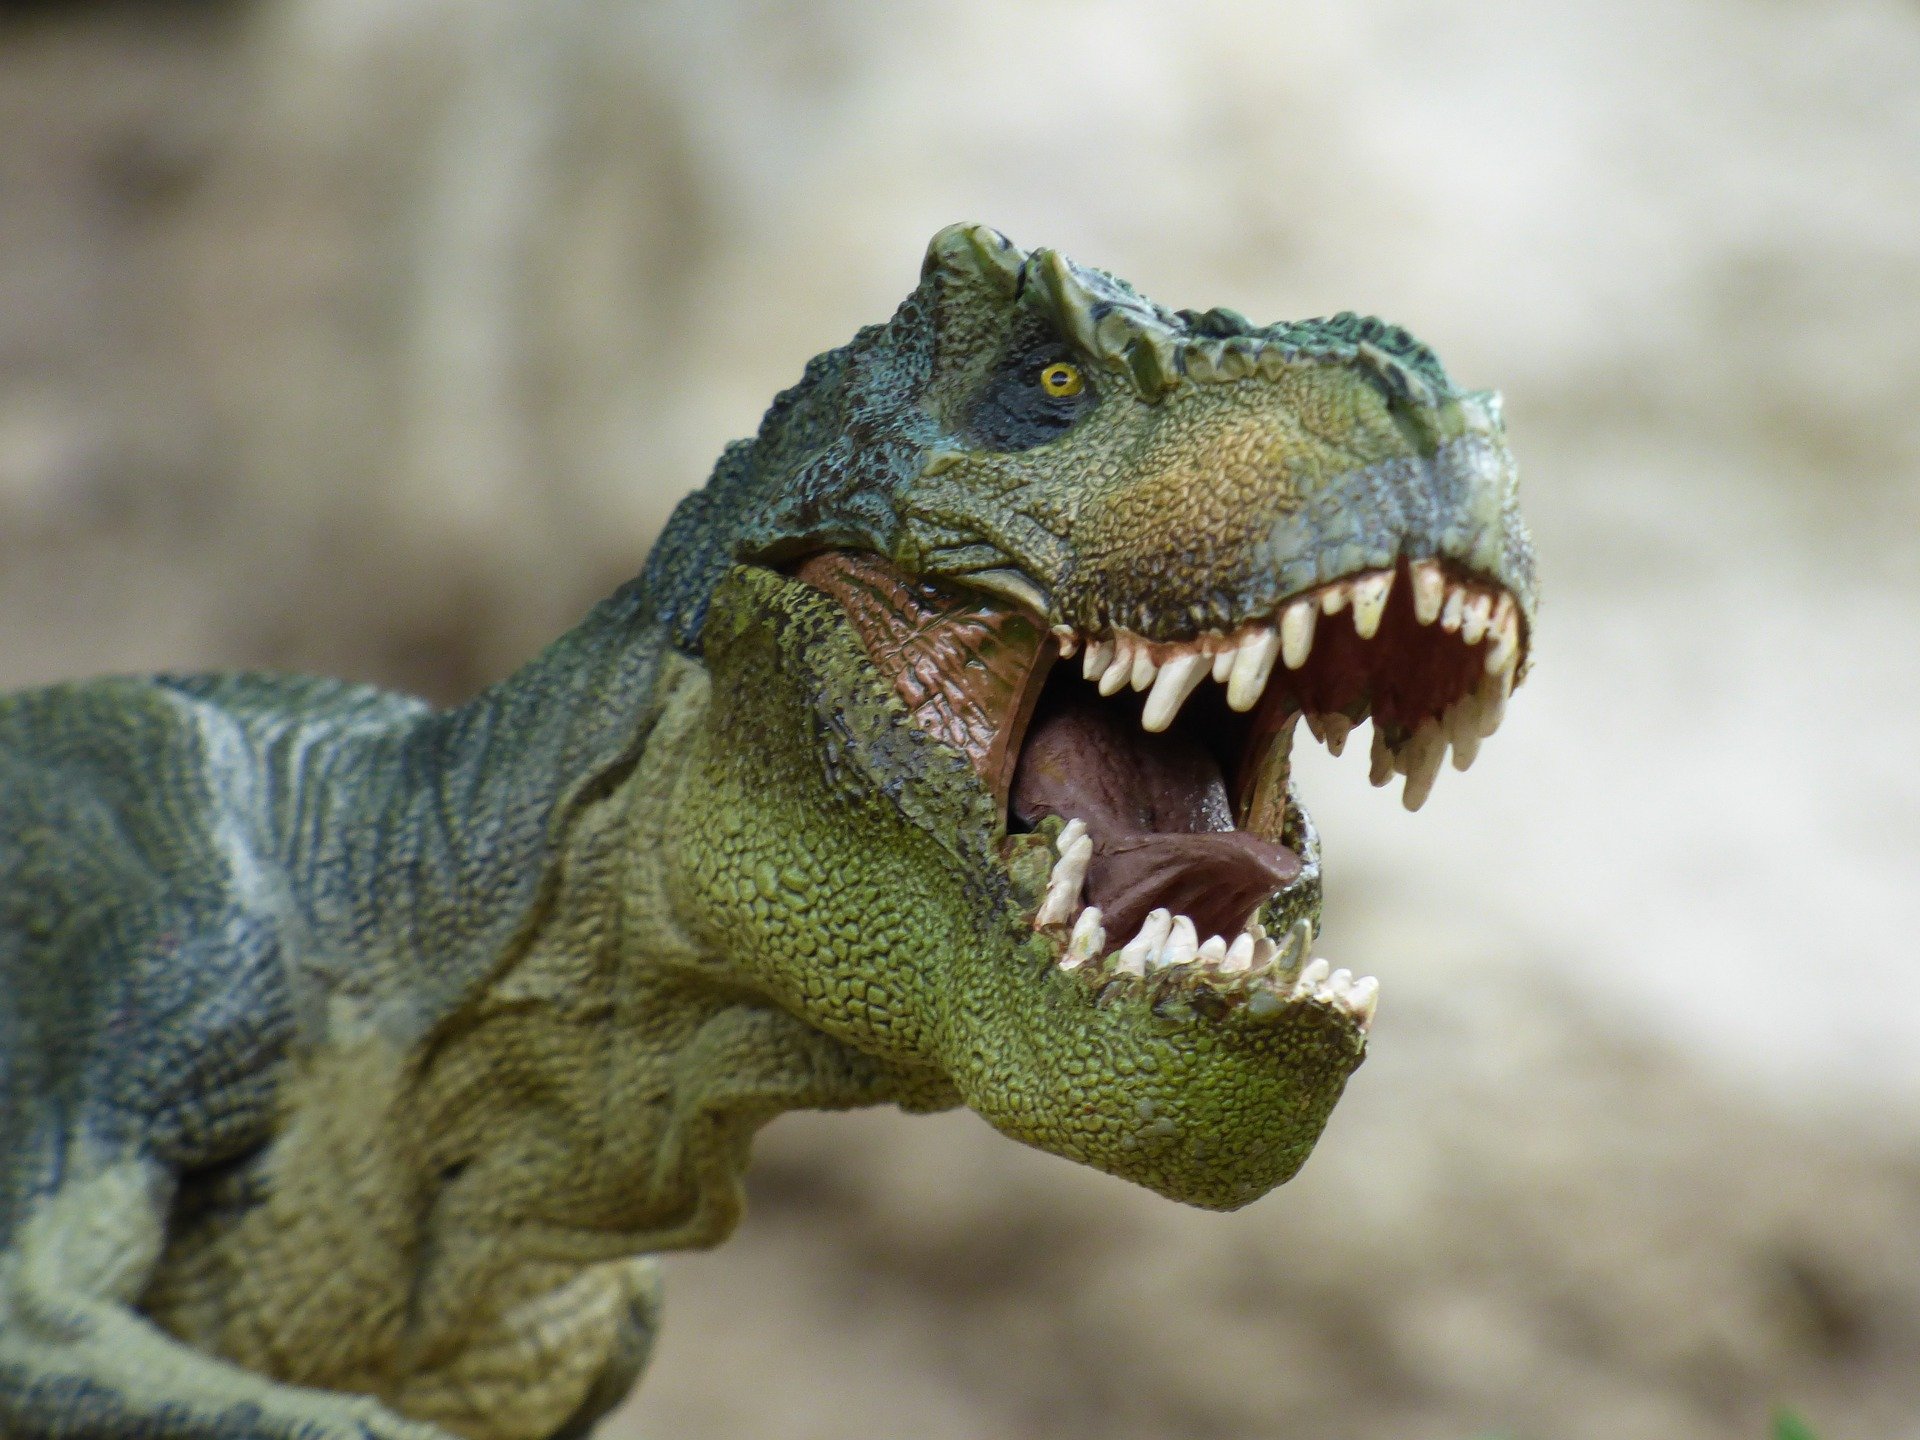 Closeup of T-rex toy figurine